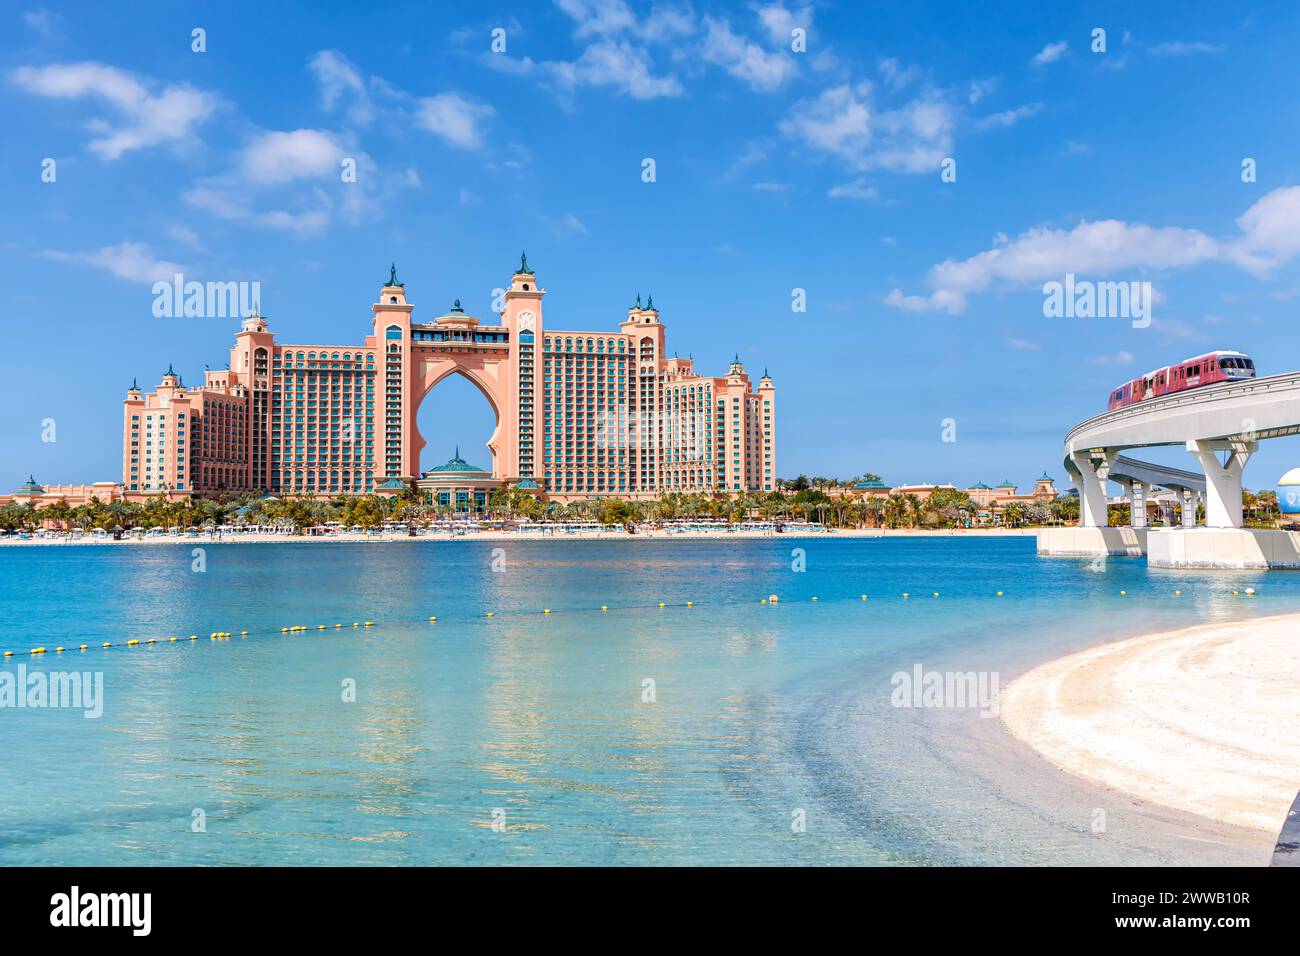 Dubai Atlantis Hotel on artificial island The Palm Jumeirah luxury vacation with Monorail hilodays Stock Photo